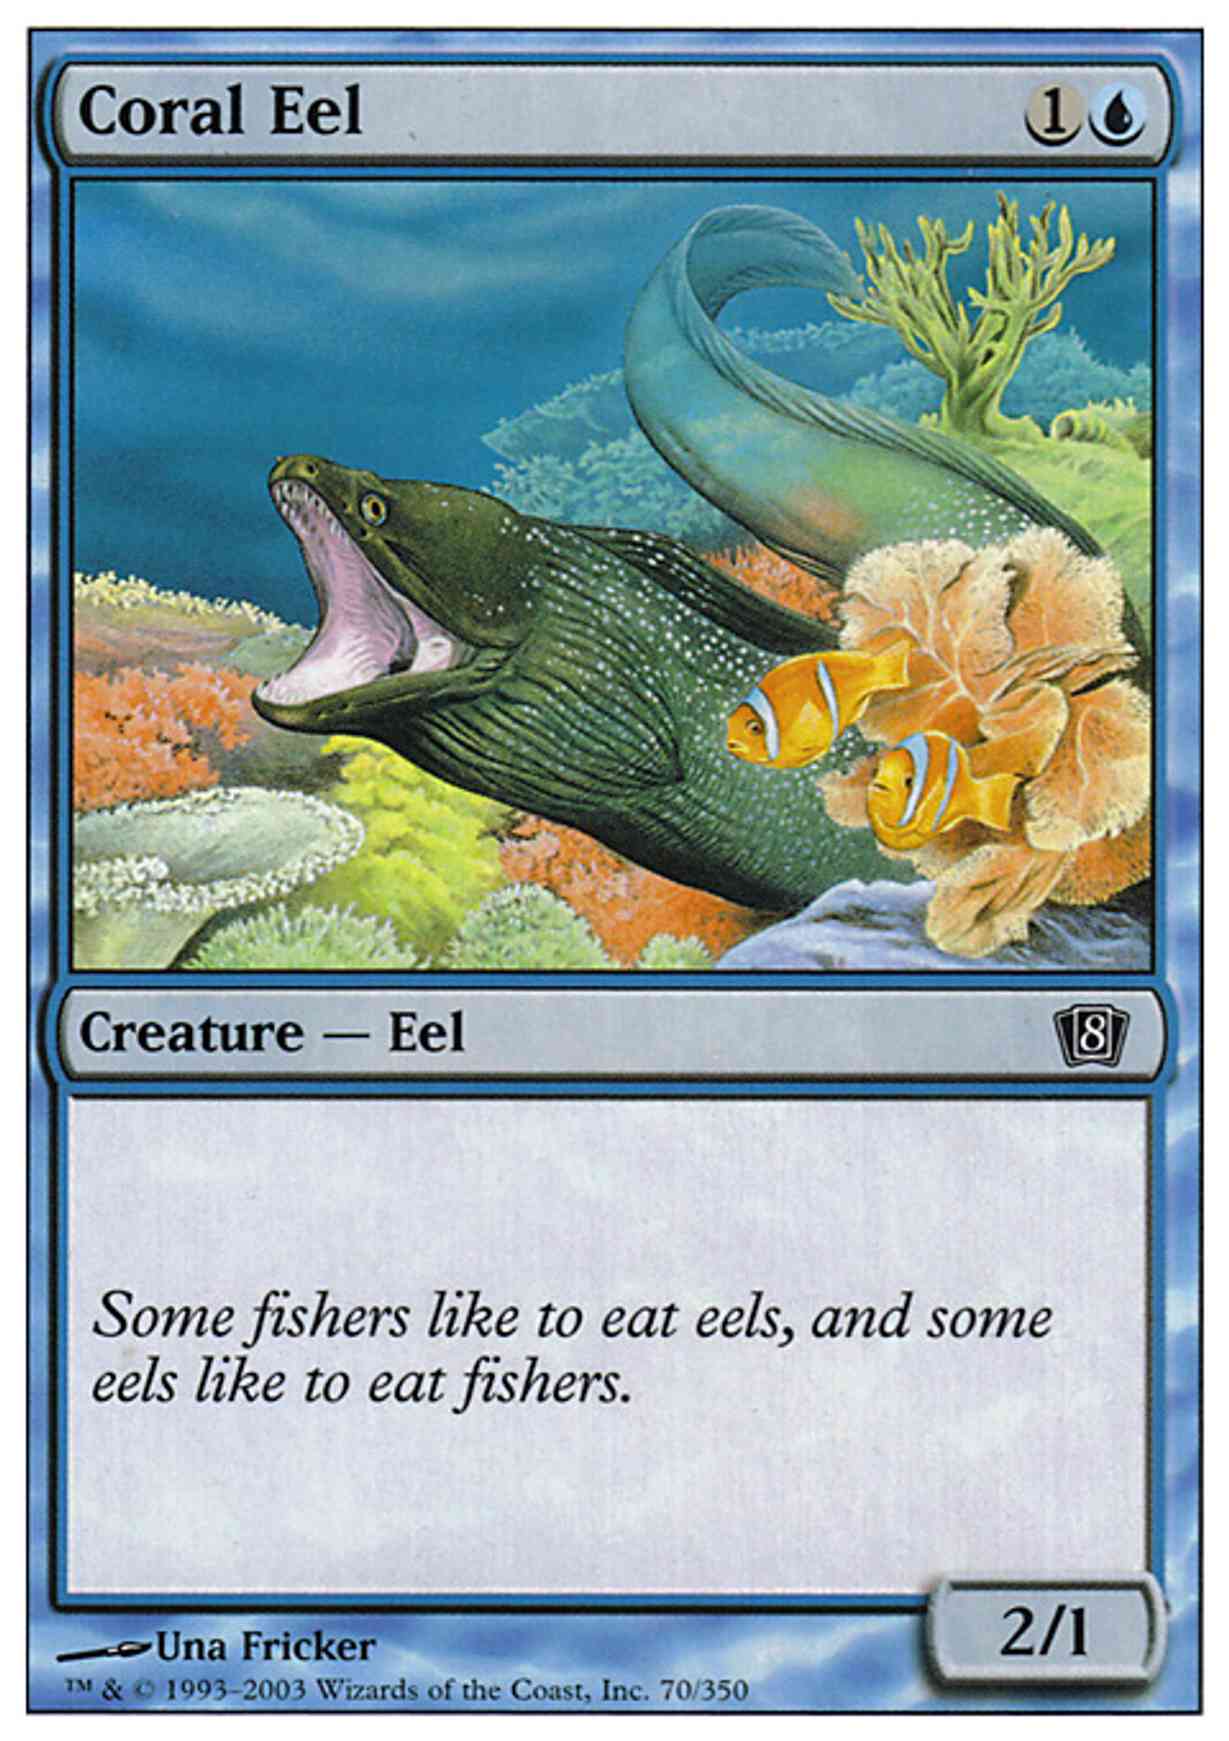 Coral Eel magic card front